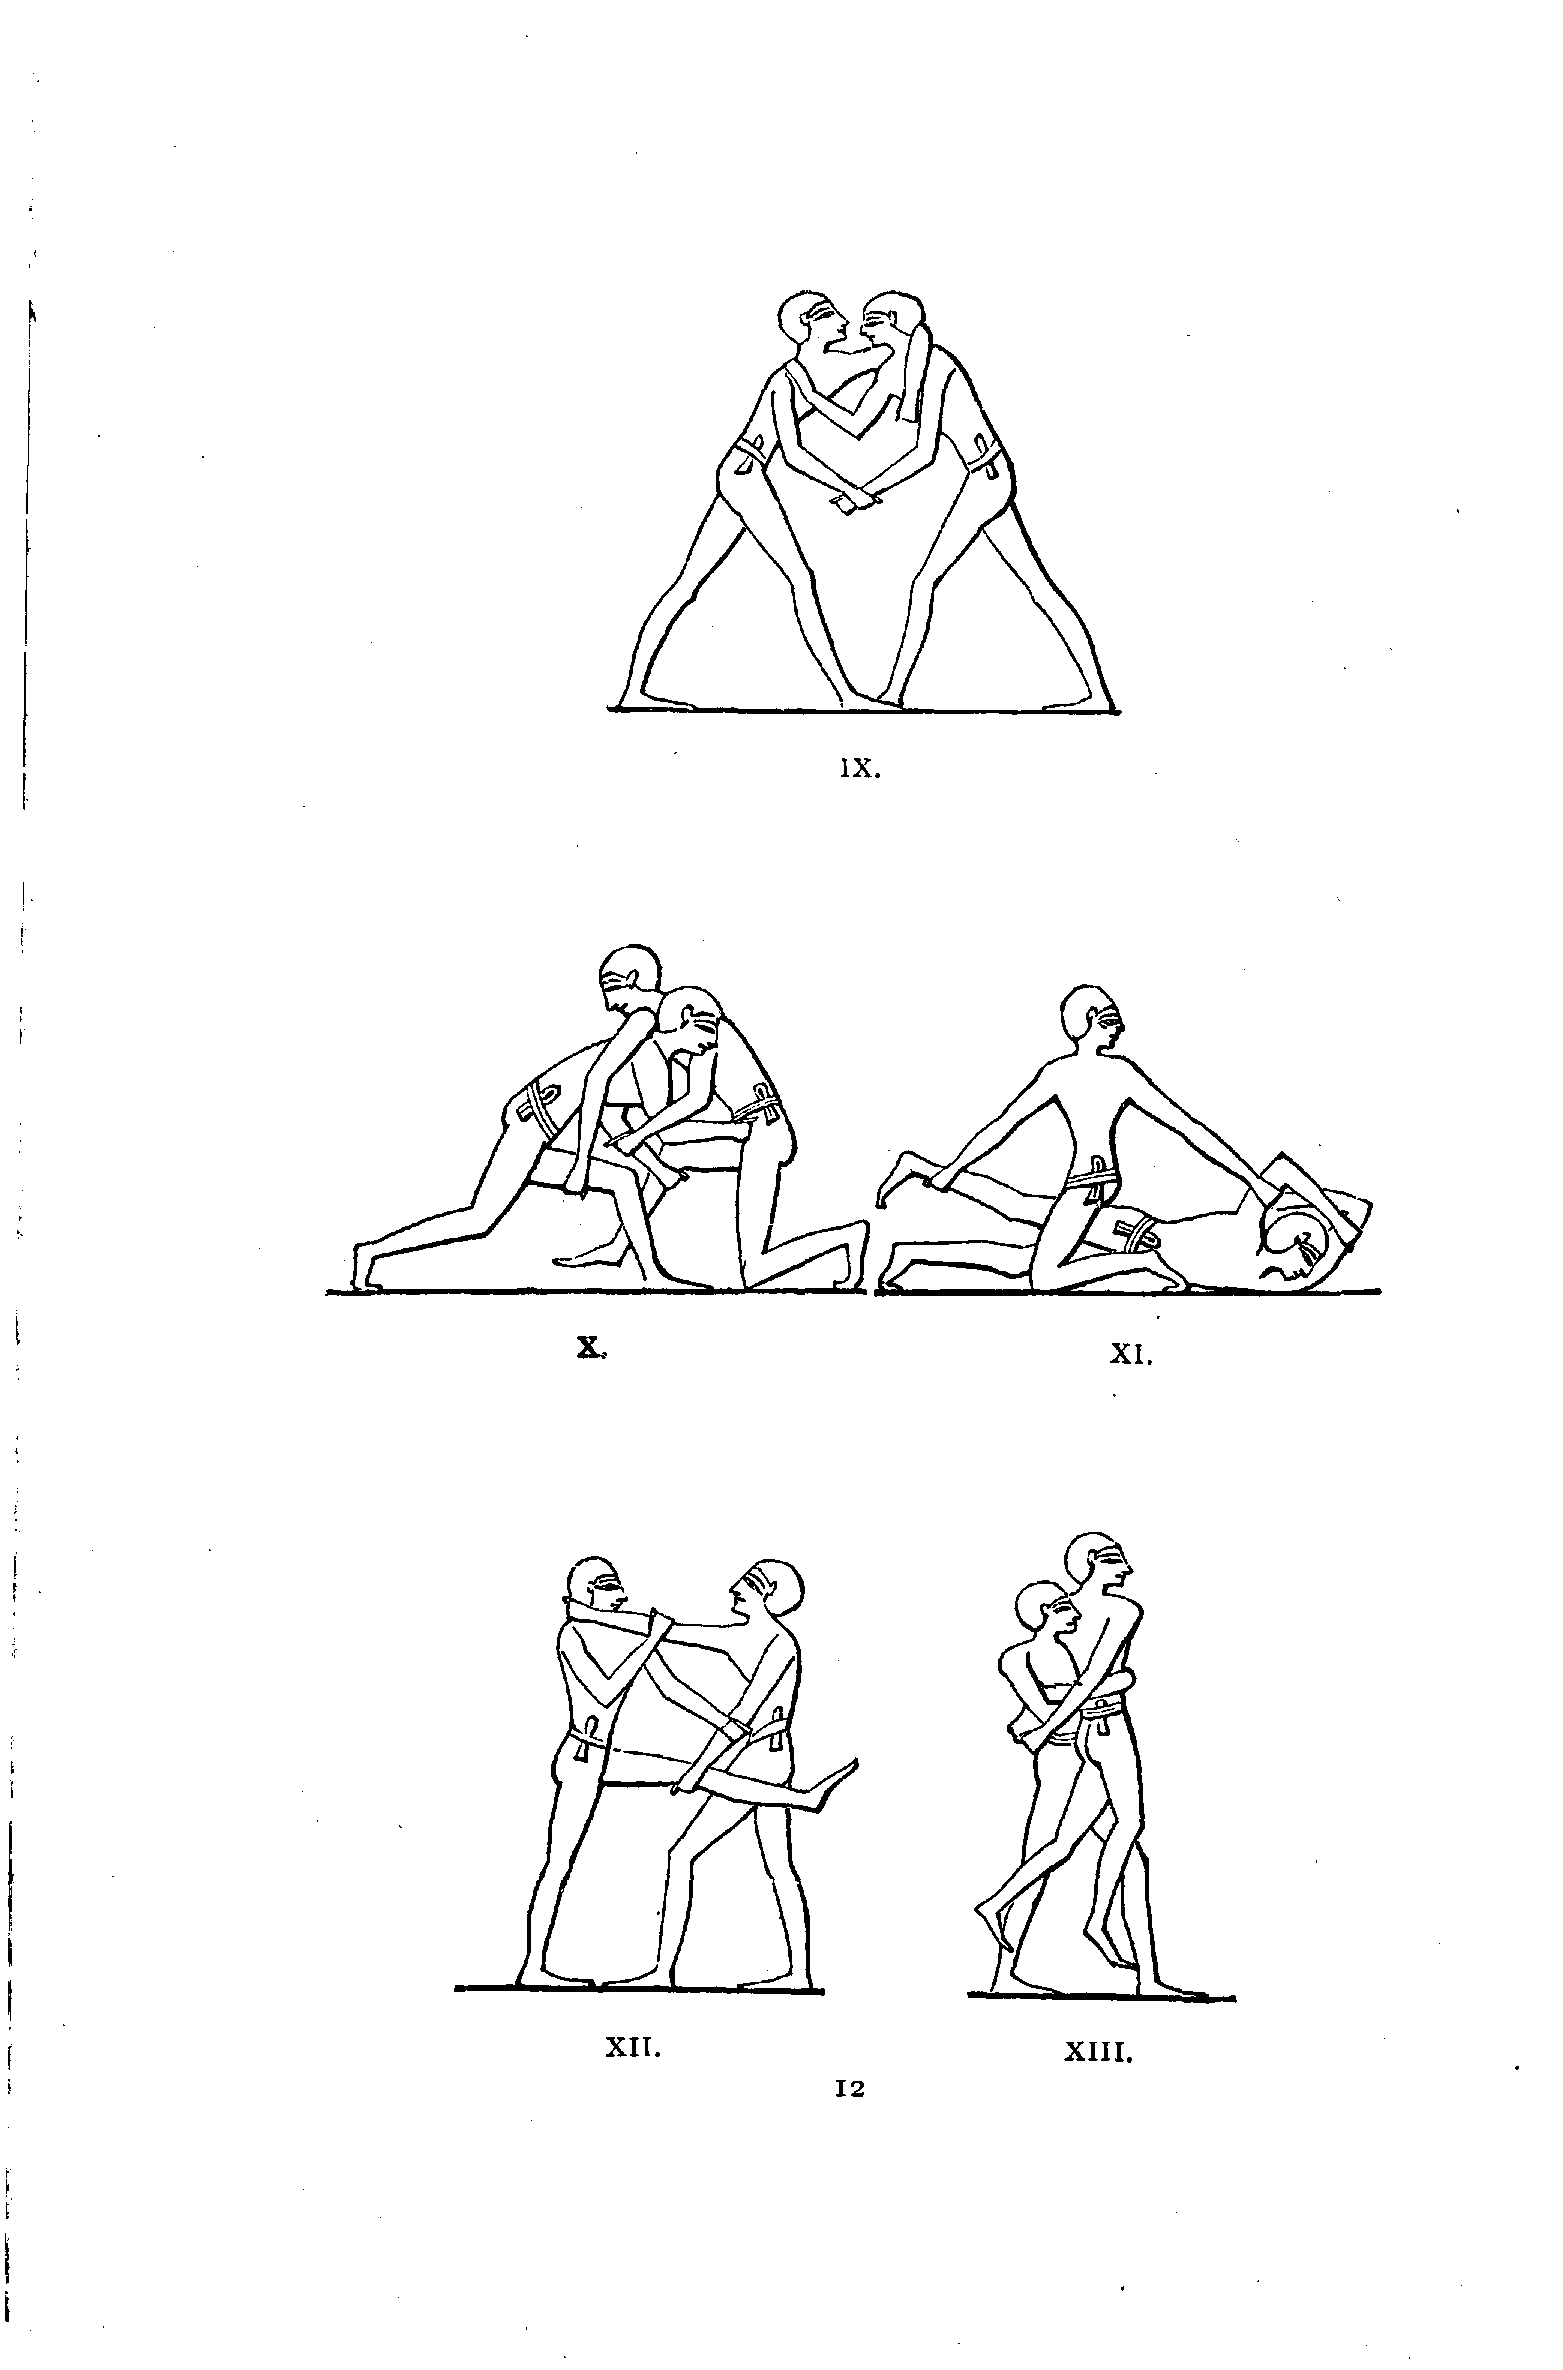 Beni Hassan wrestling tomb art c. 3000 B.C.